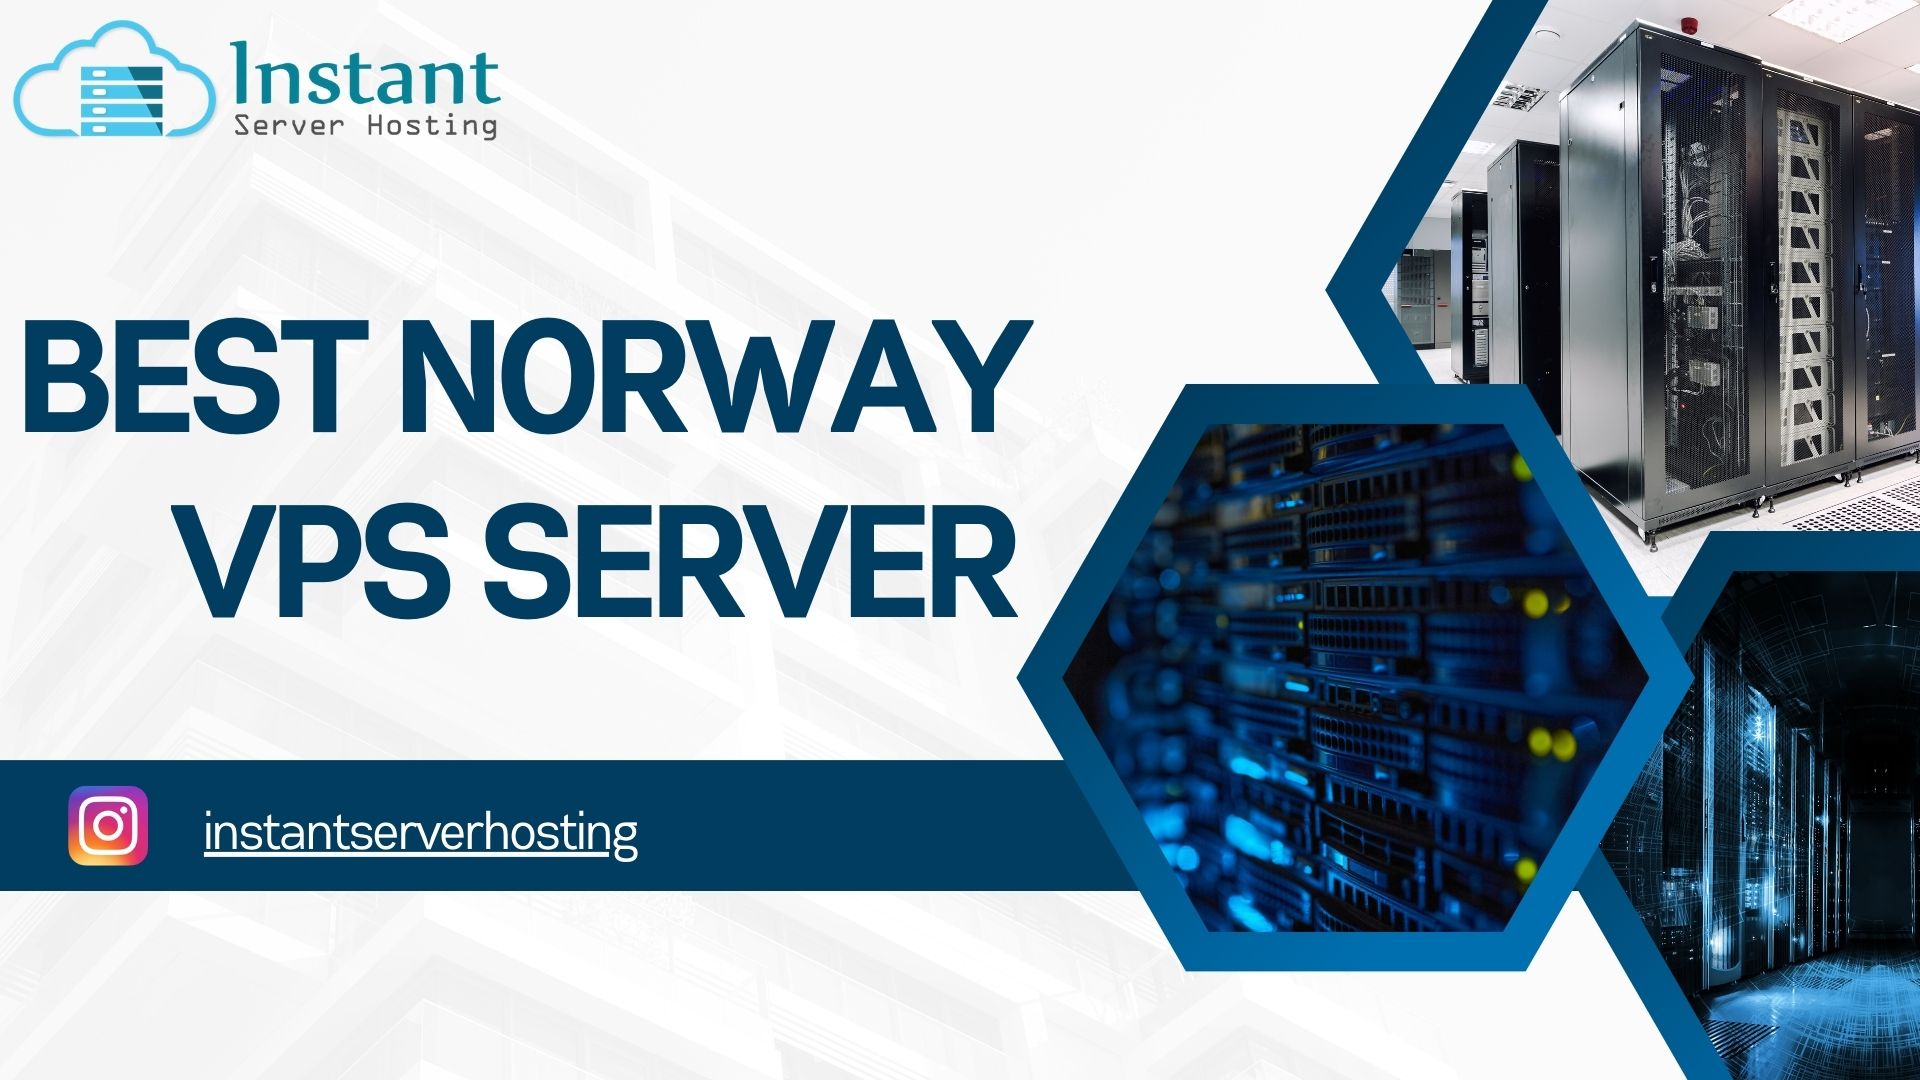 Best Norway VPS Server